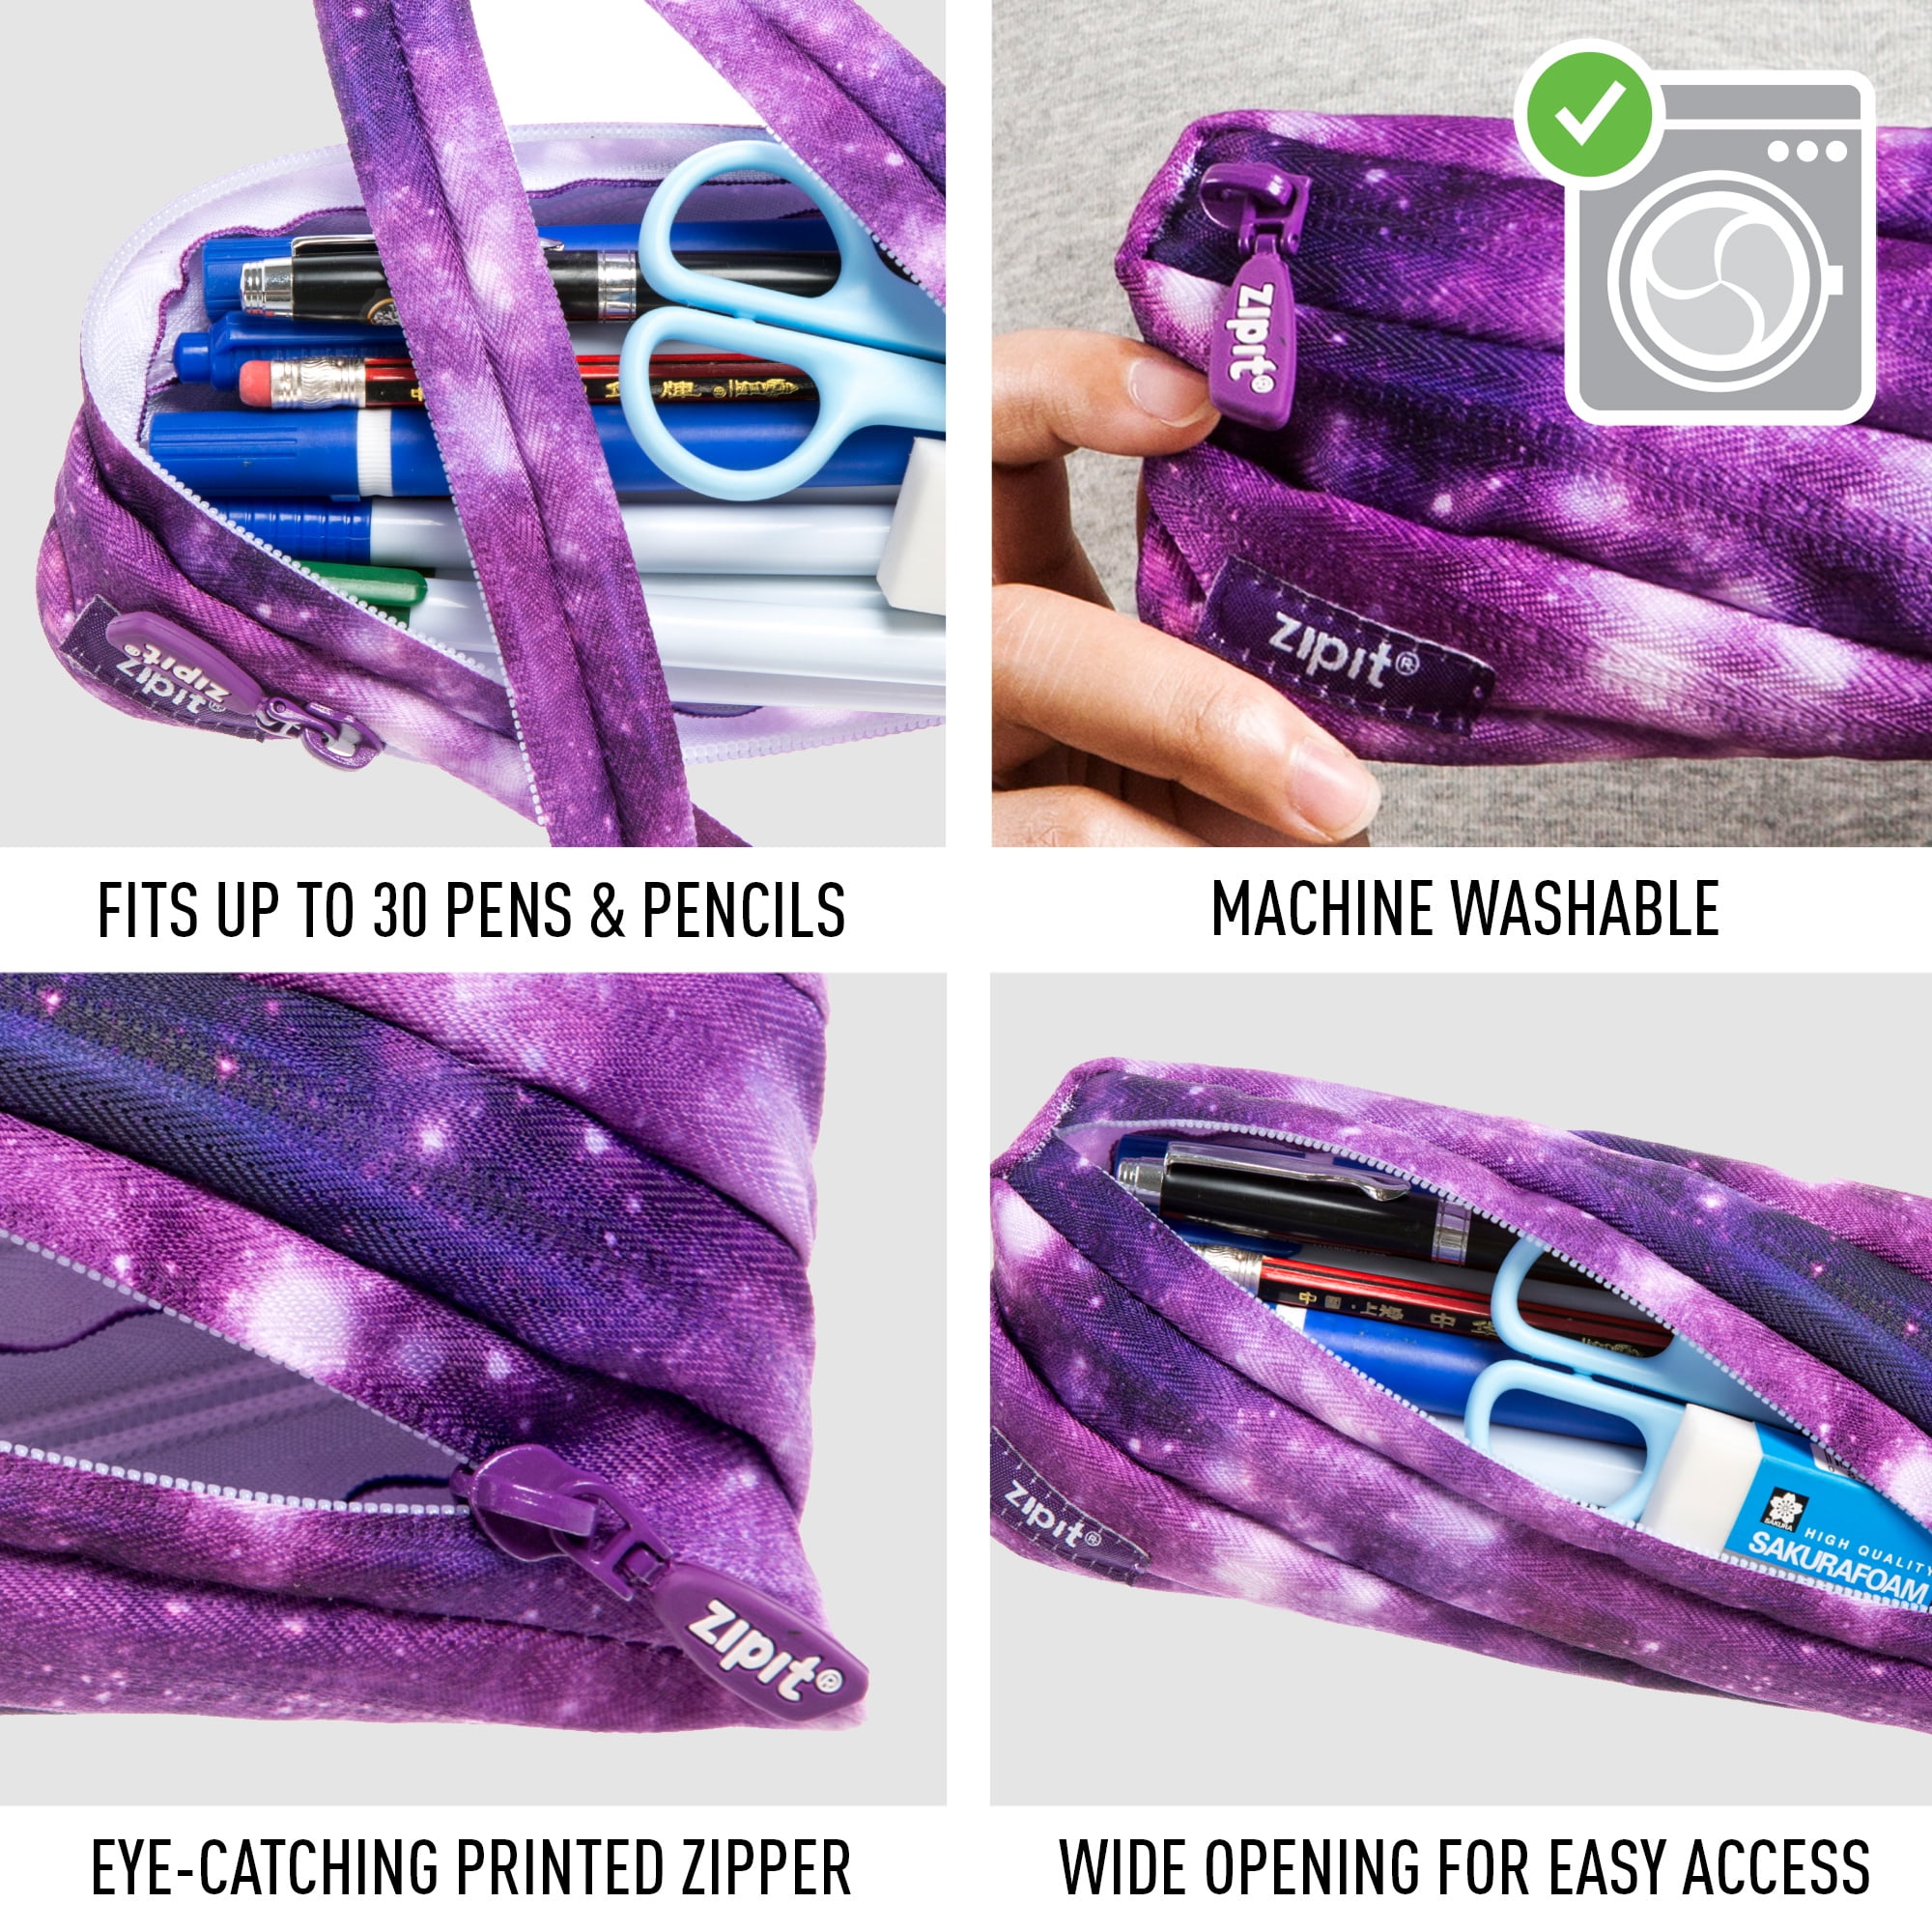 Zipit Fresh Colorz Pencil Box, Purple Galaxy